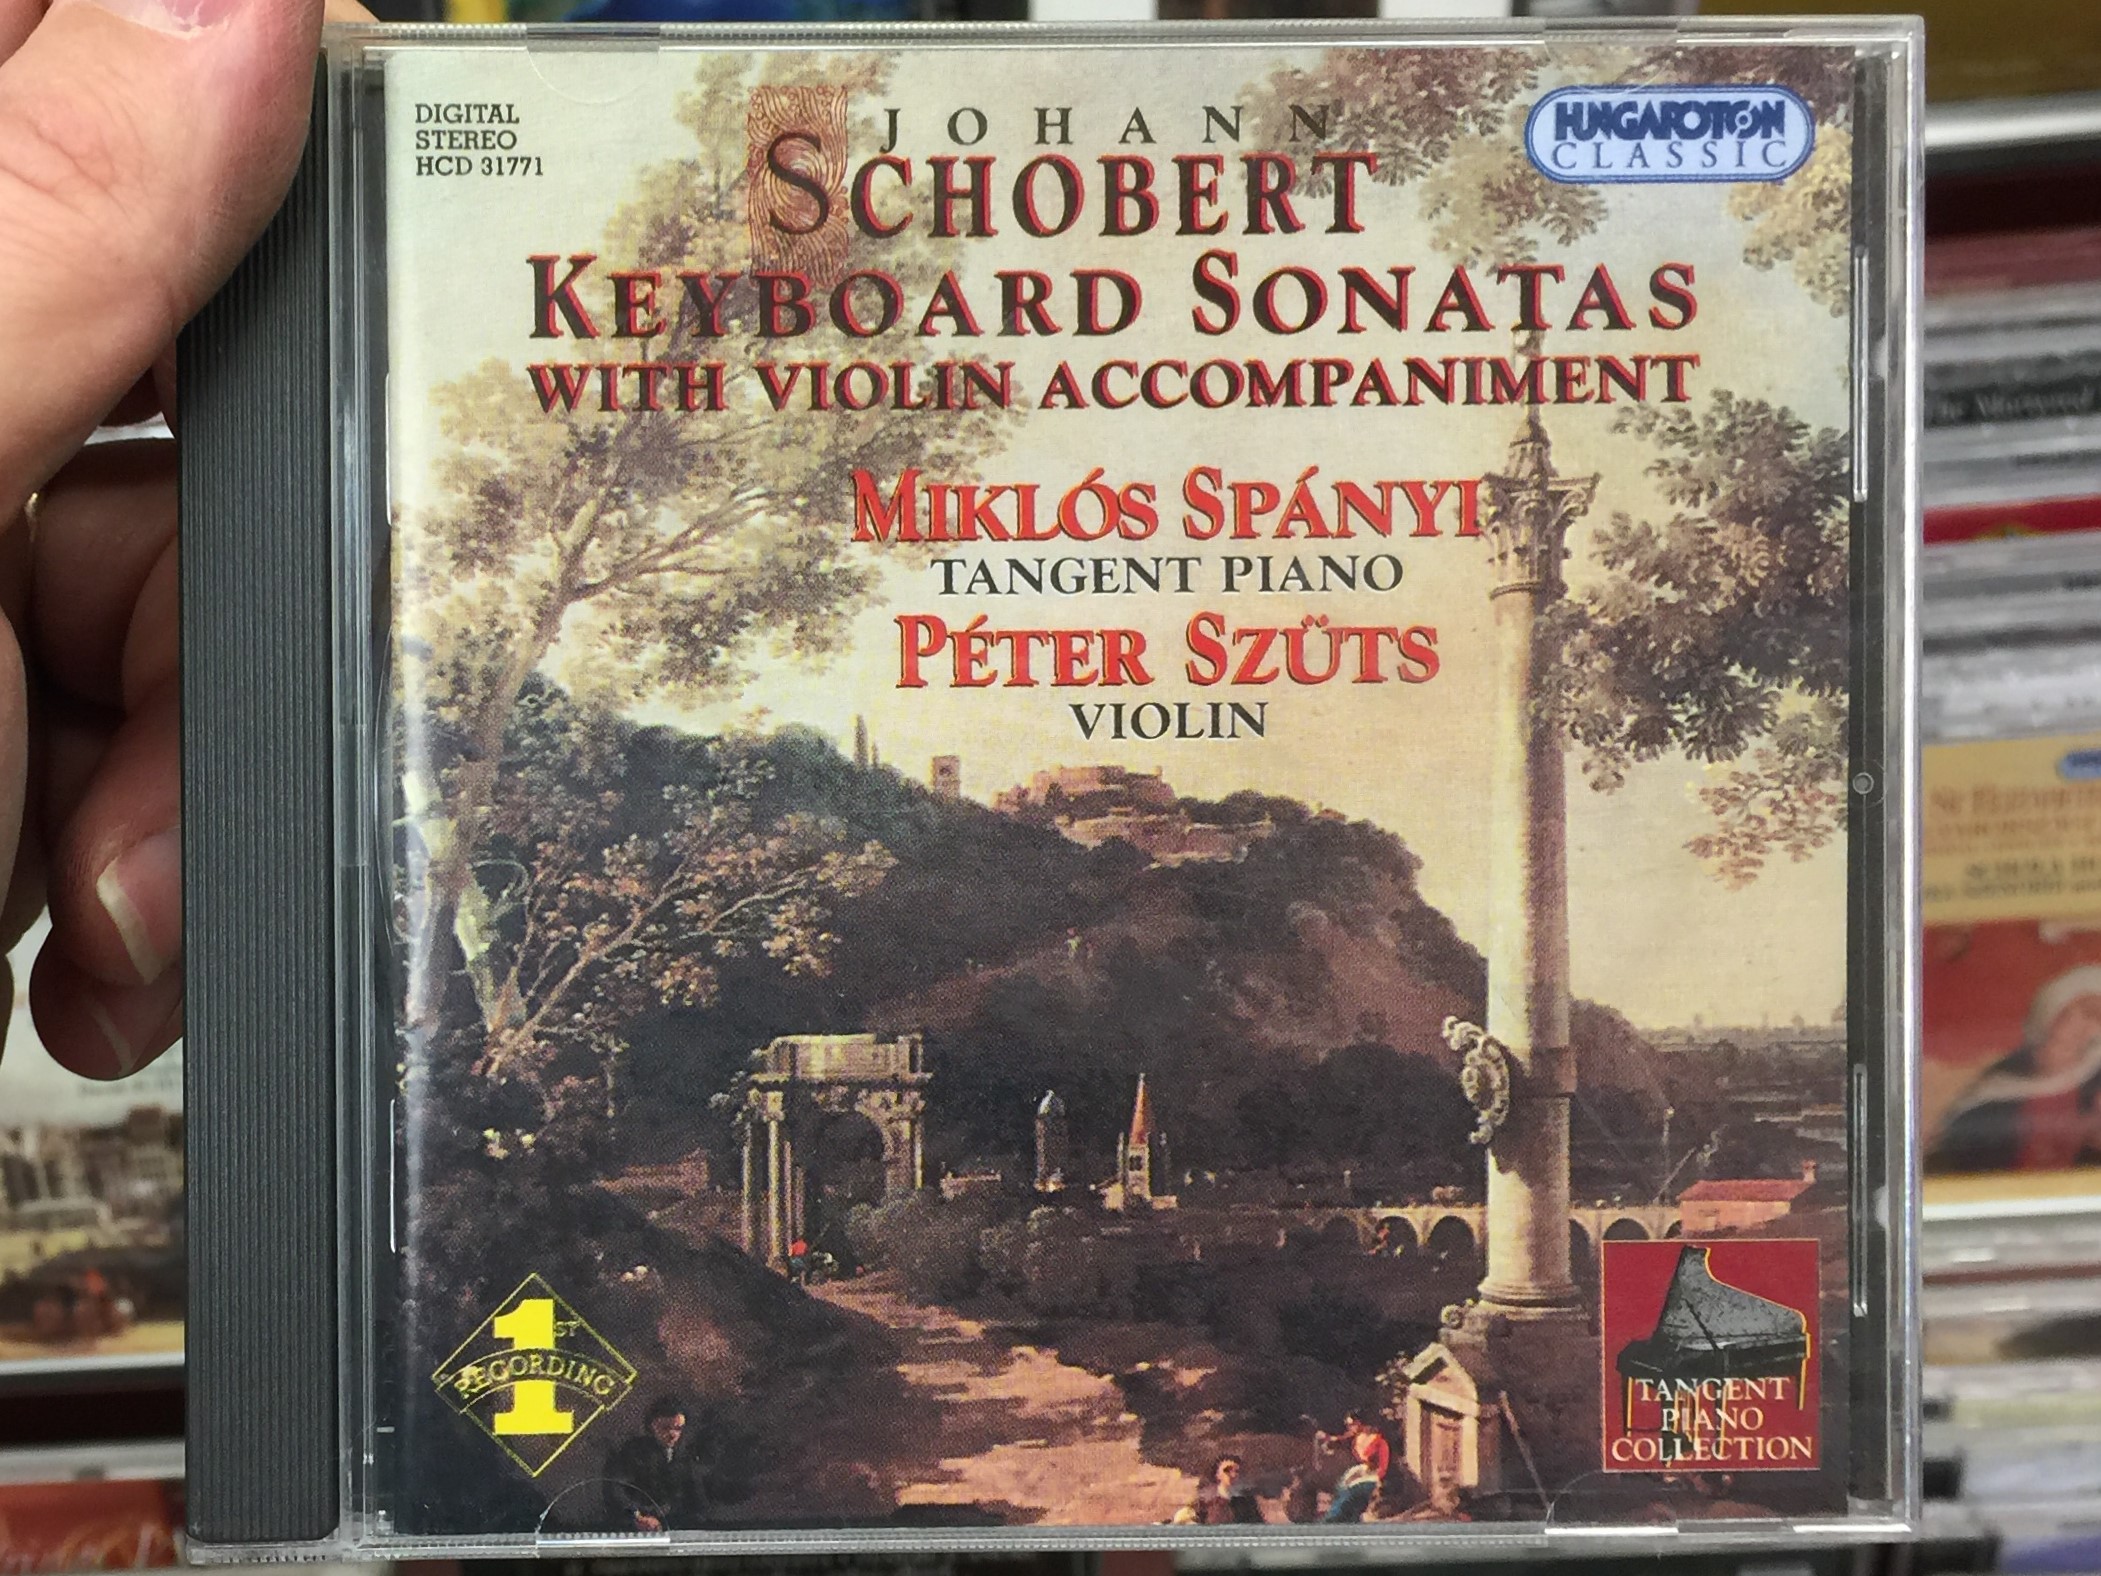 johann-schobert-keyboard-sonatas-with-violin-accompaniement-mikl-s-sp-nyi-tangent-piano-p-ter-sz-ts-violin-hungaroton-classic-audio-cd-1998-stereo-hcd-31771-1-.jpg